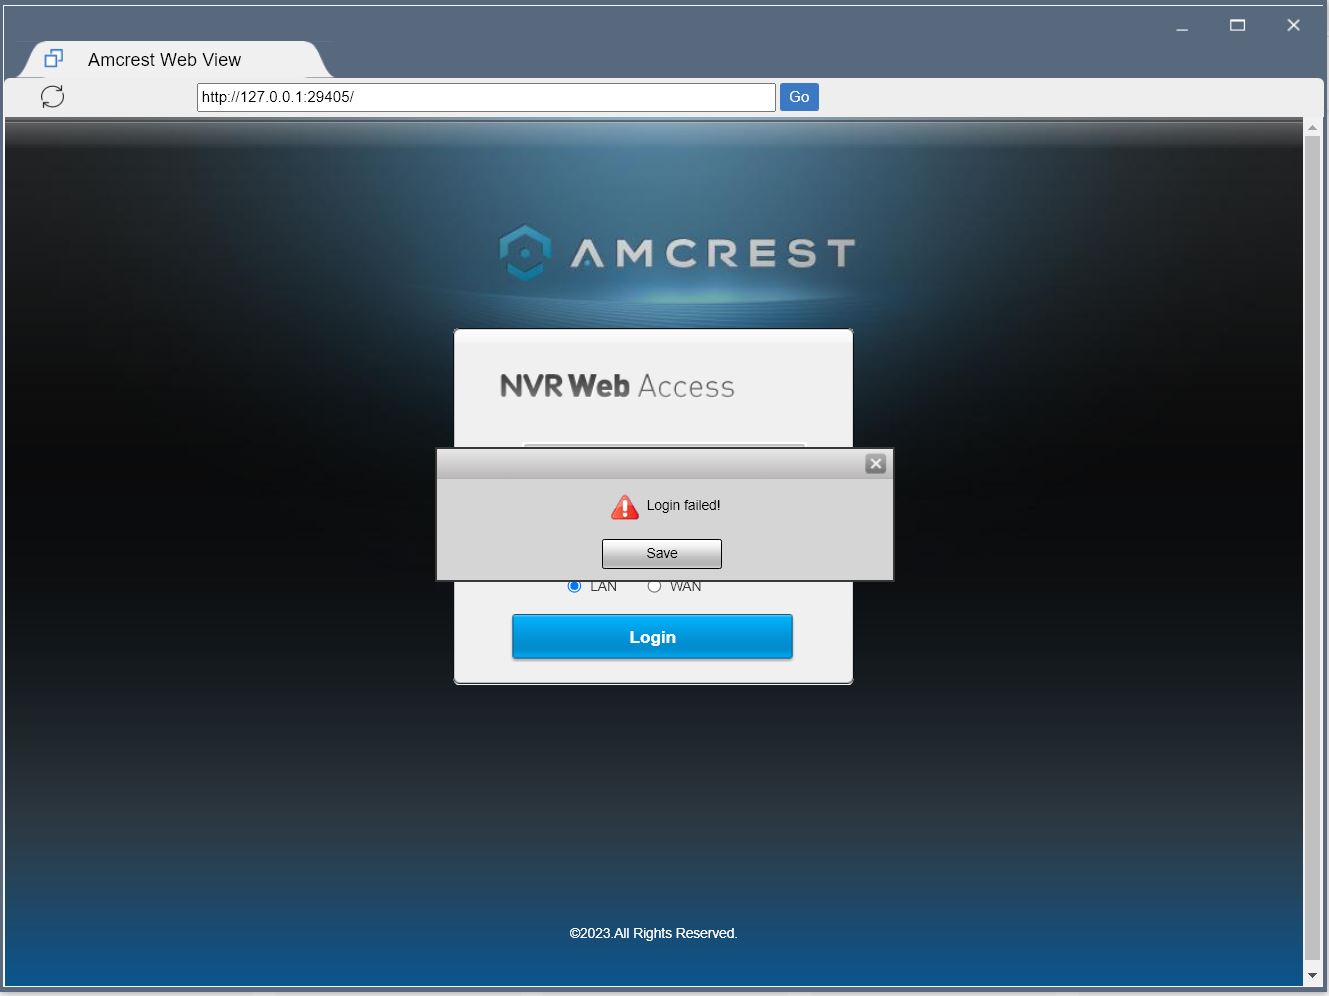 amcrest web view login failed.JPG